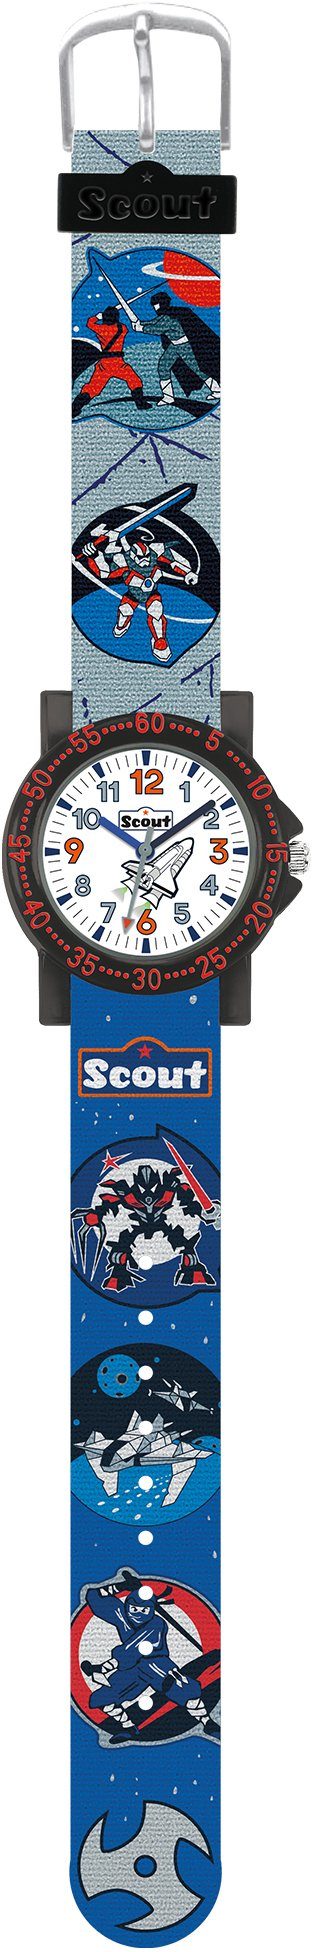 Scout Quarzuhr The 280375026, Geschenk auch als Lernuhr, IT-Collection, ideal